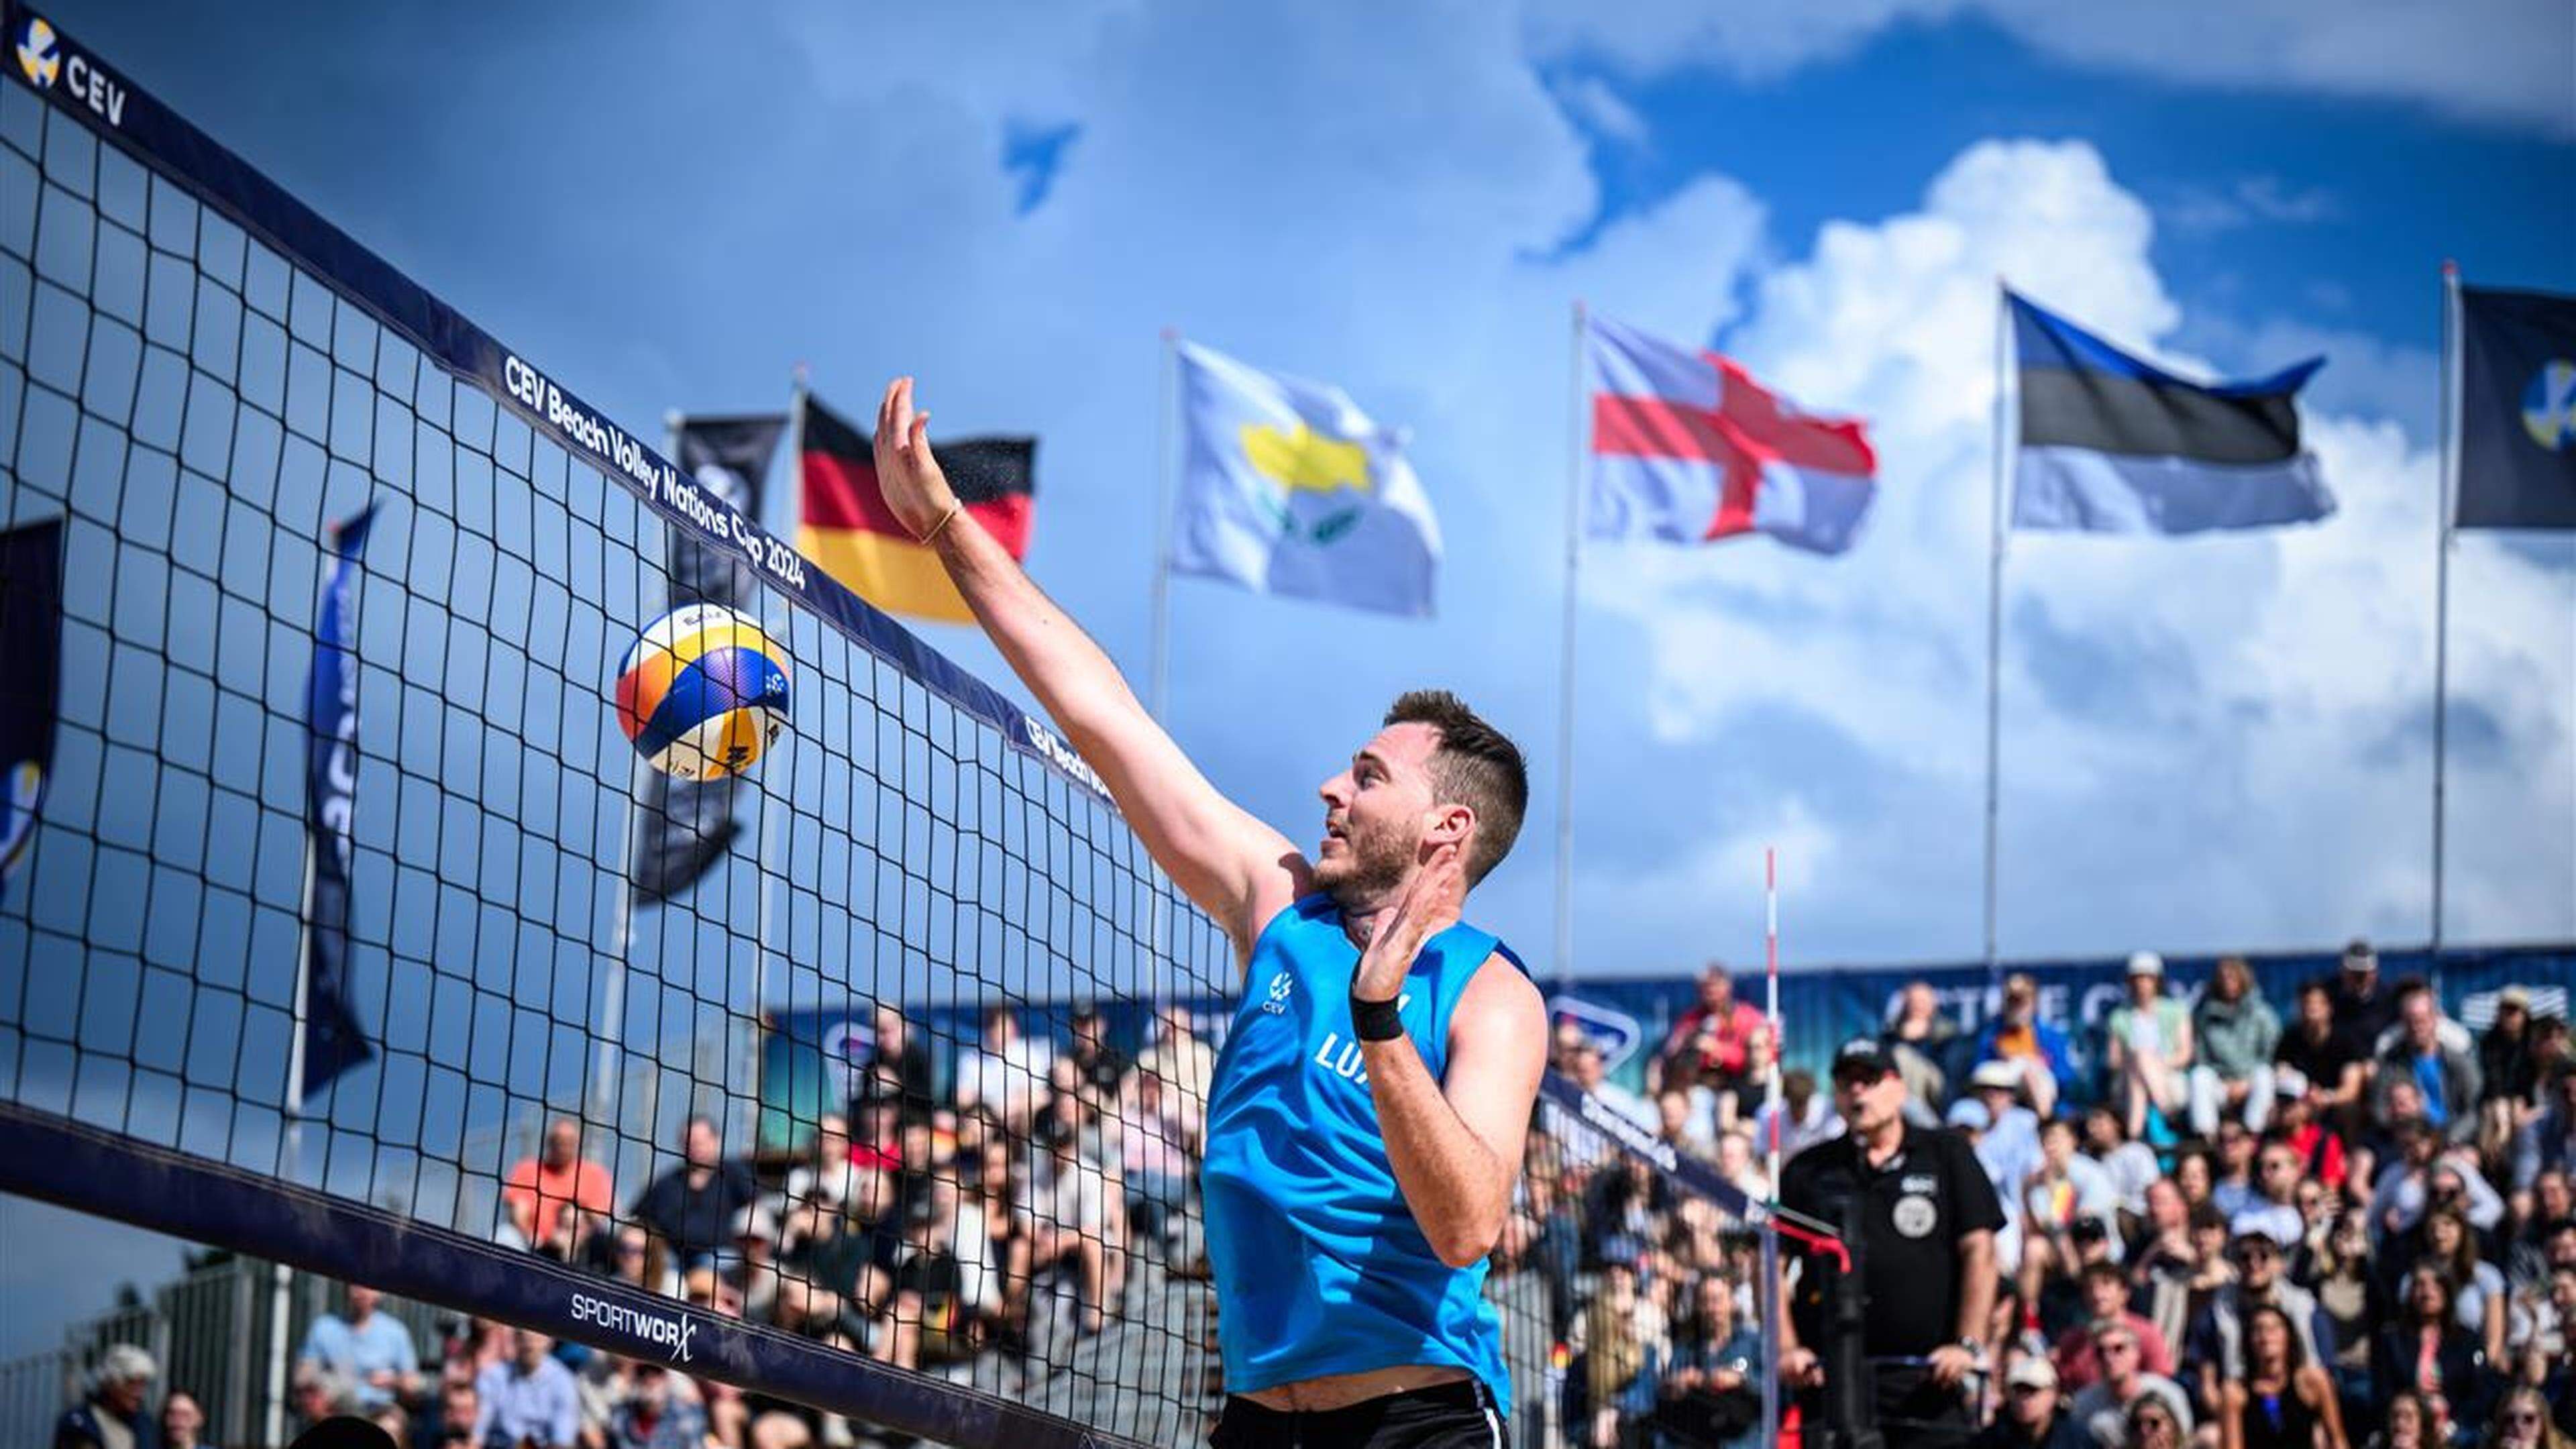 Chris Zender genoss die Atmosphäre beim Beach Volley Nations Cup in Hamburg.